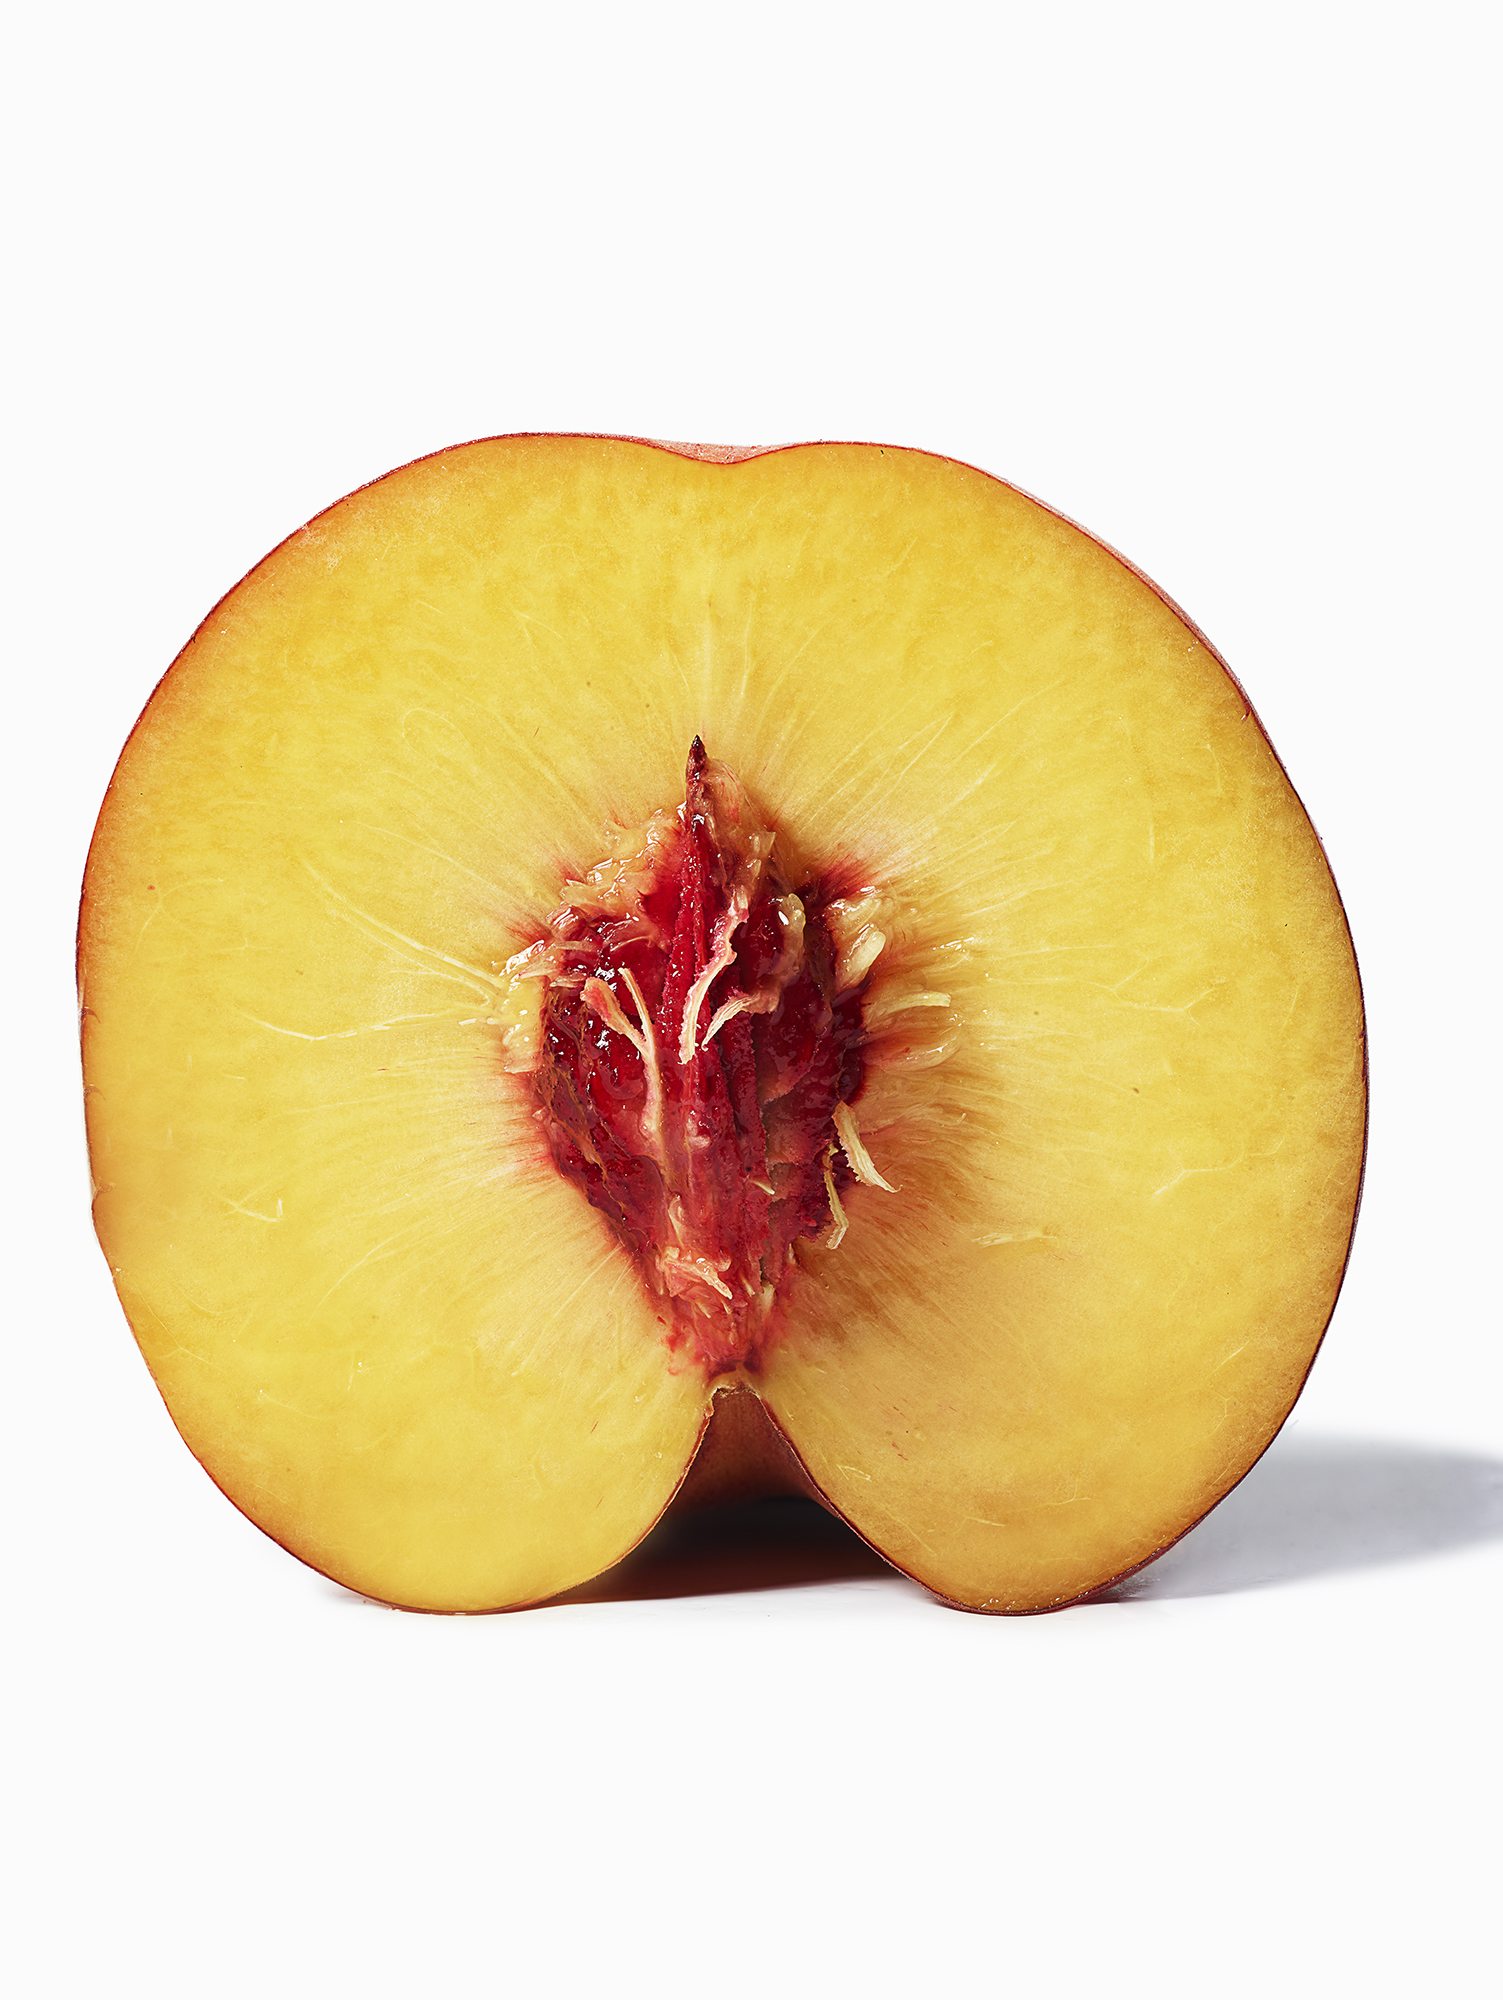 Chelsea Bloxsome | Food Photographer London upside down peach